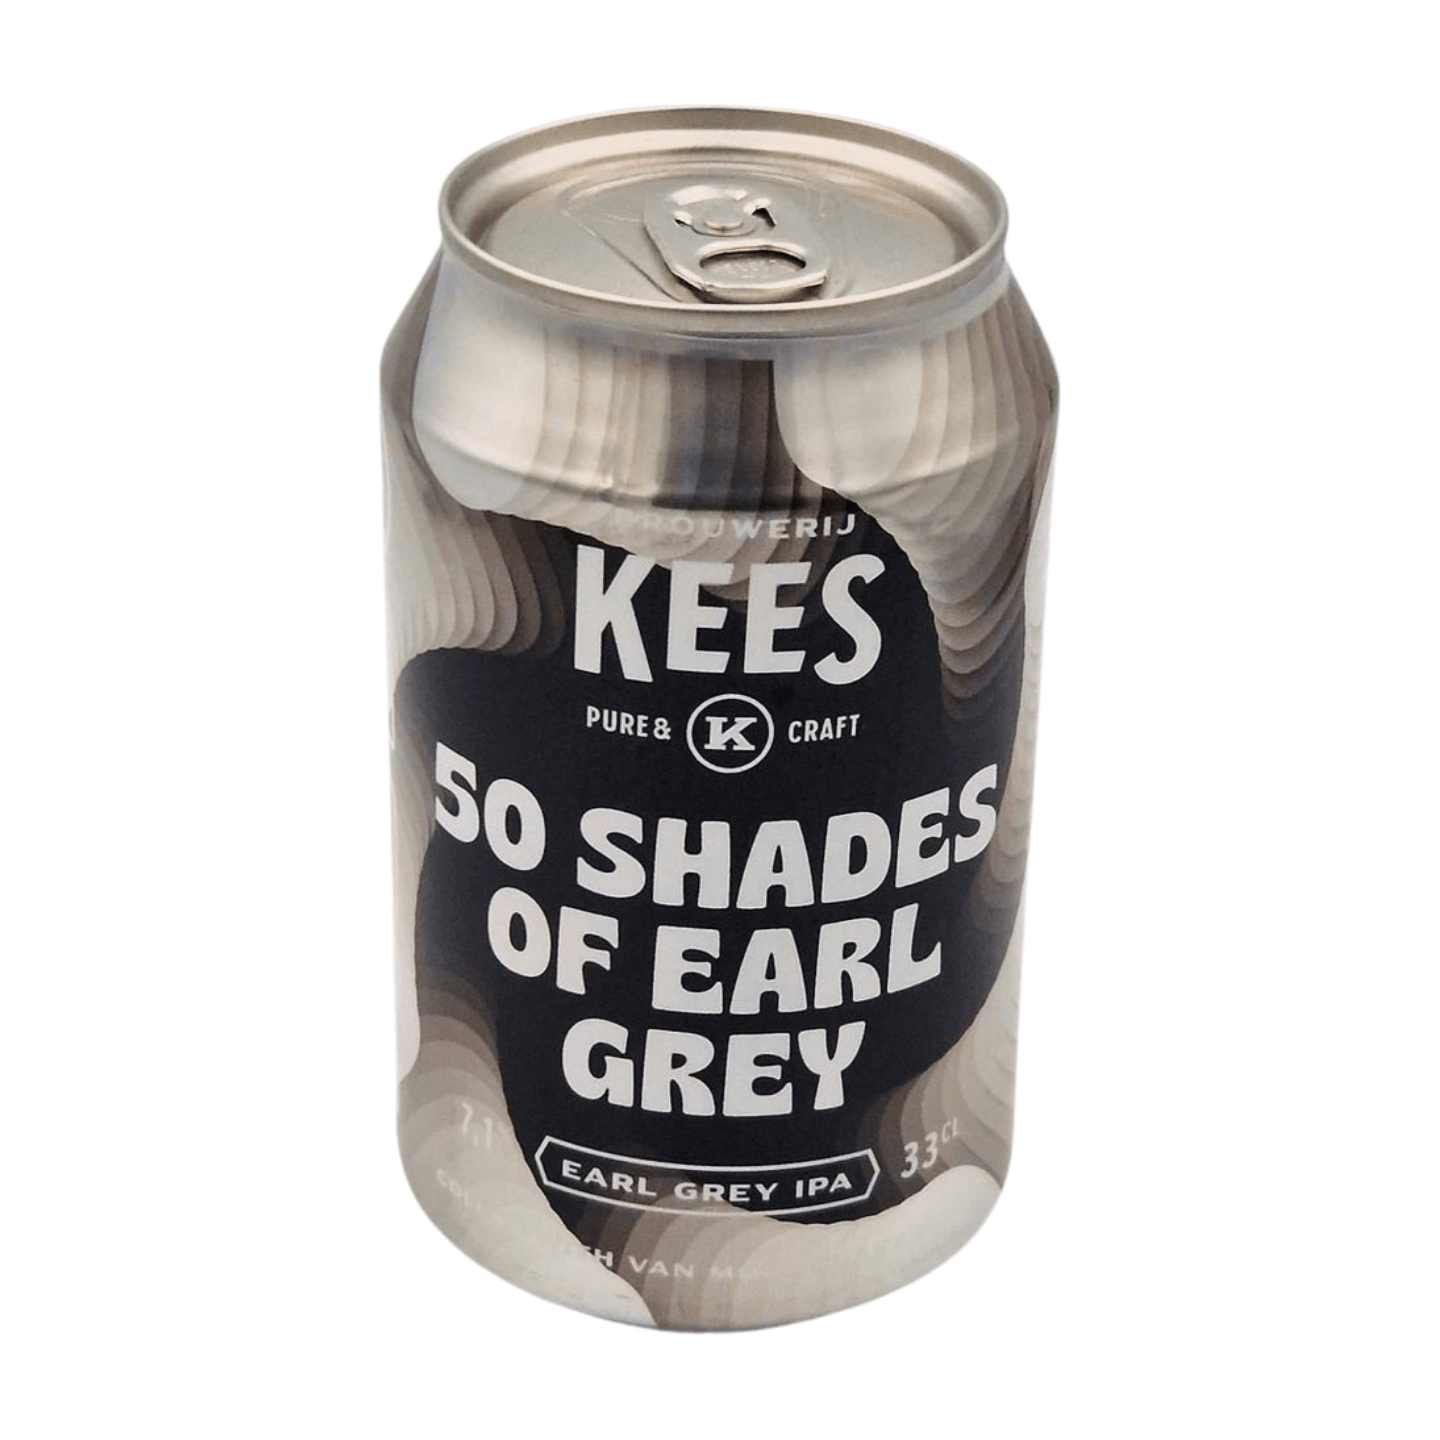 Kees X Van Moll 50 Shades of Earl Grey | Tea IPA Webshop Online Verdins Bierwinkel Rotterdam